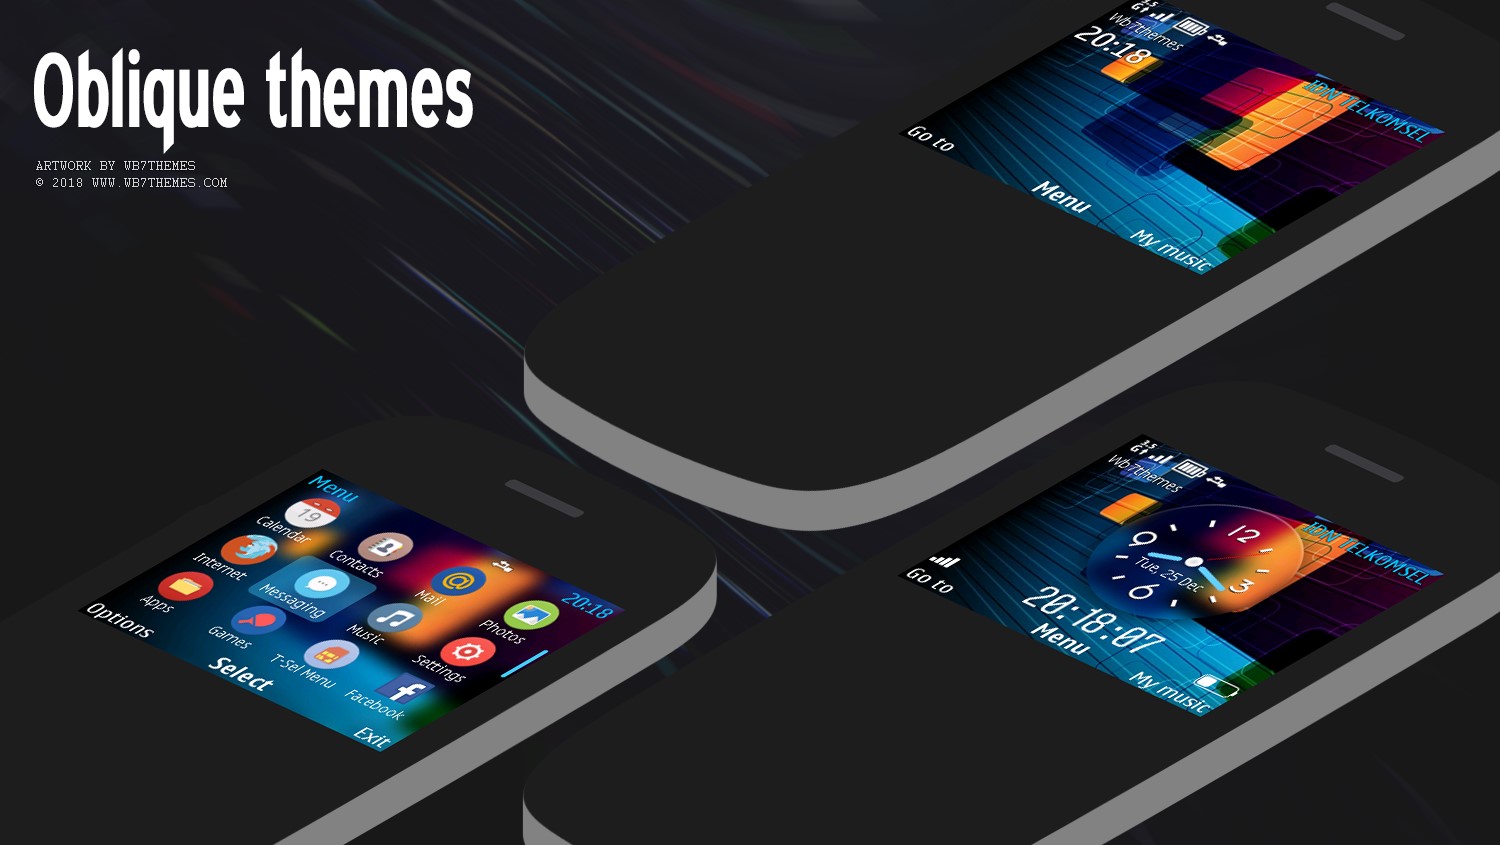 Nokia 210 themes size 320x240 themes download